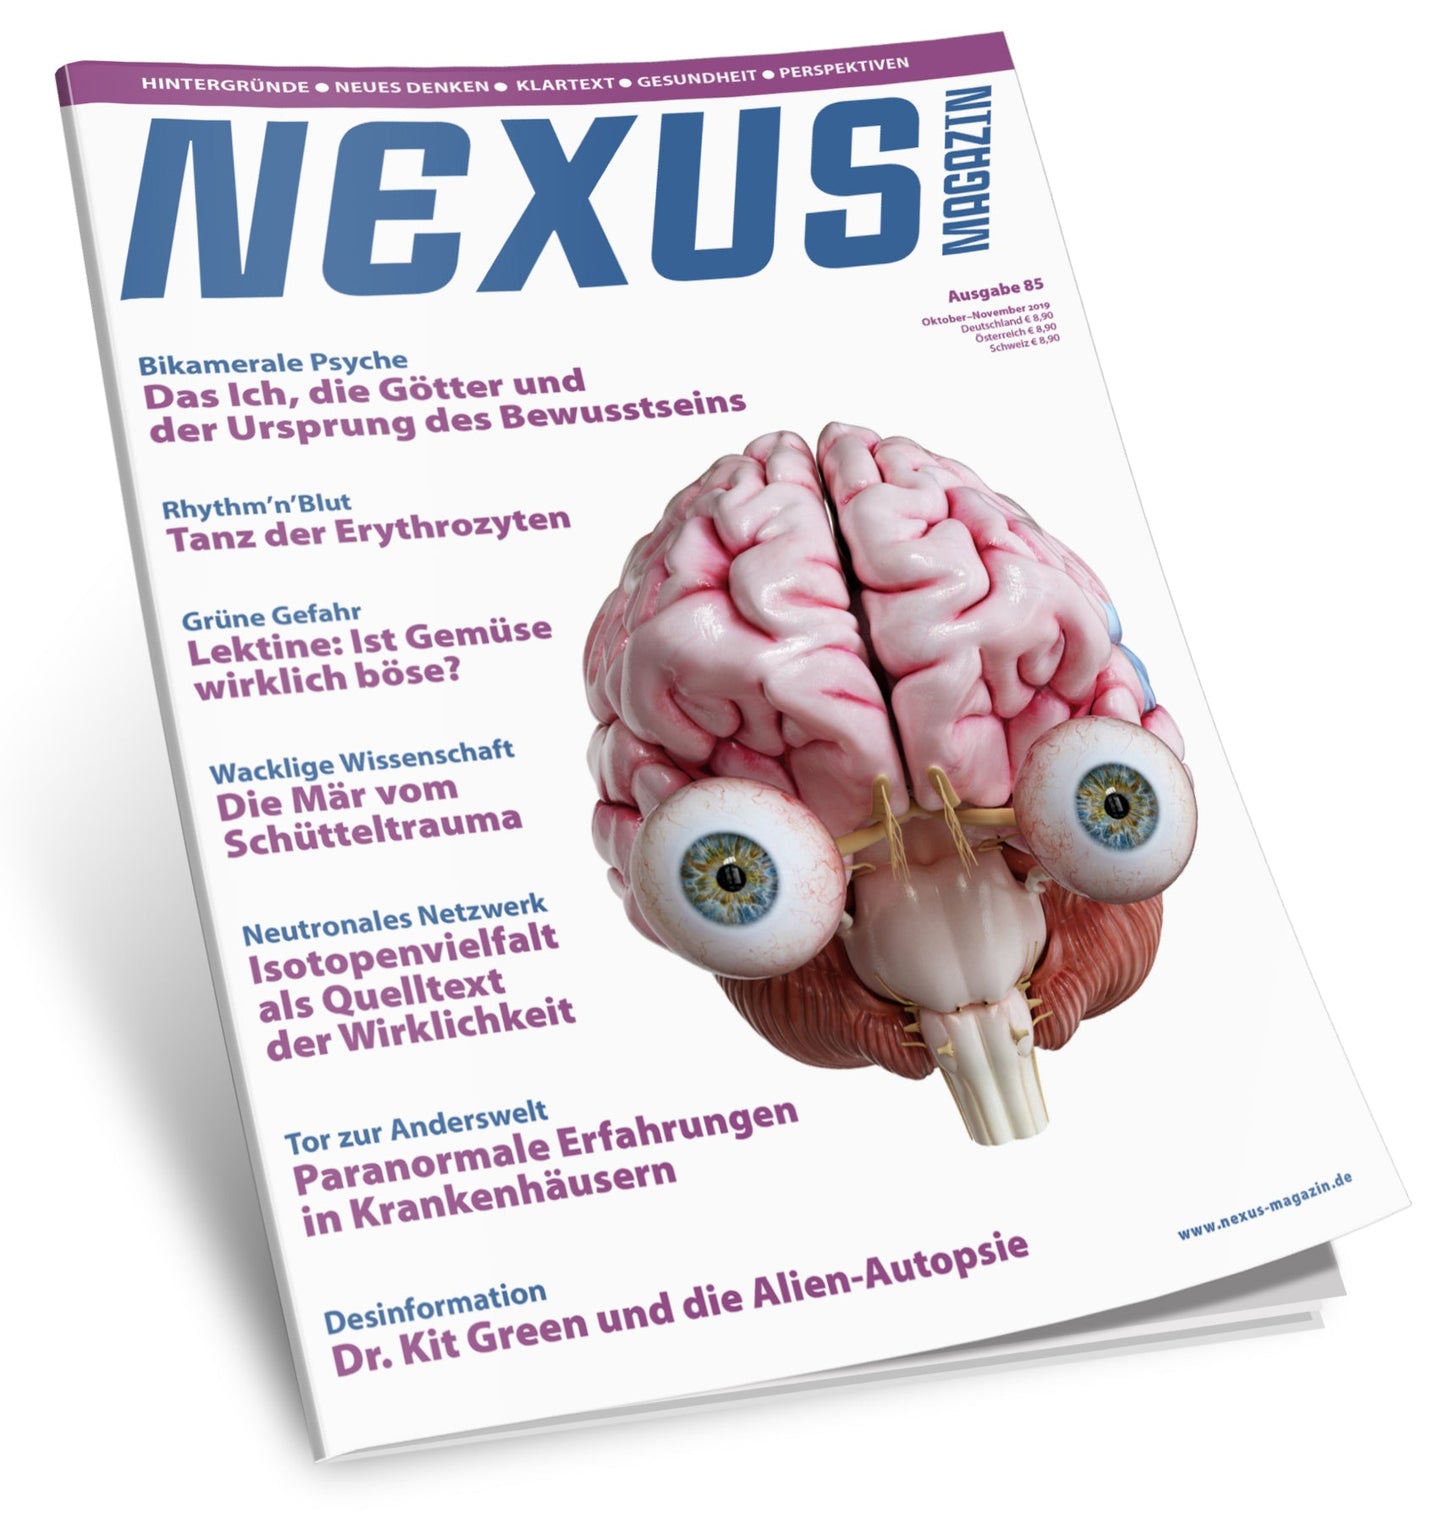 NEXUS-Magazin 85